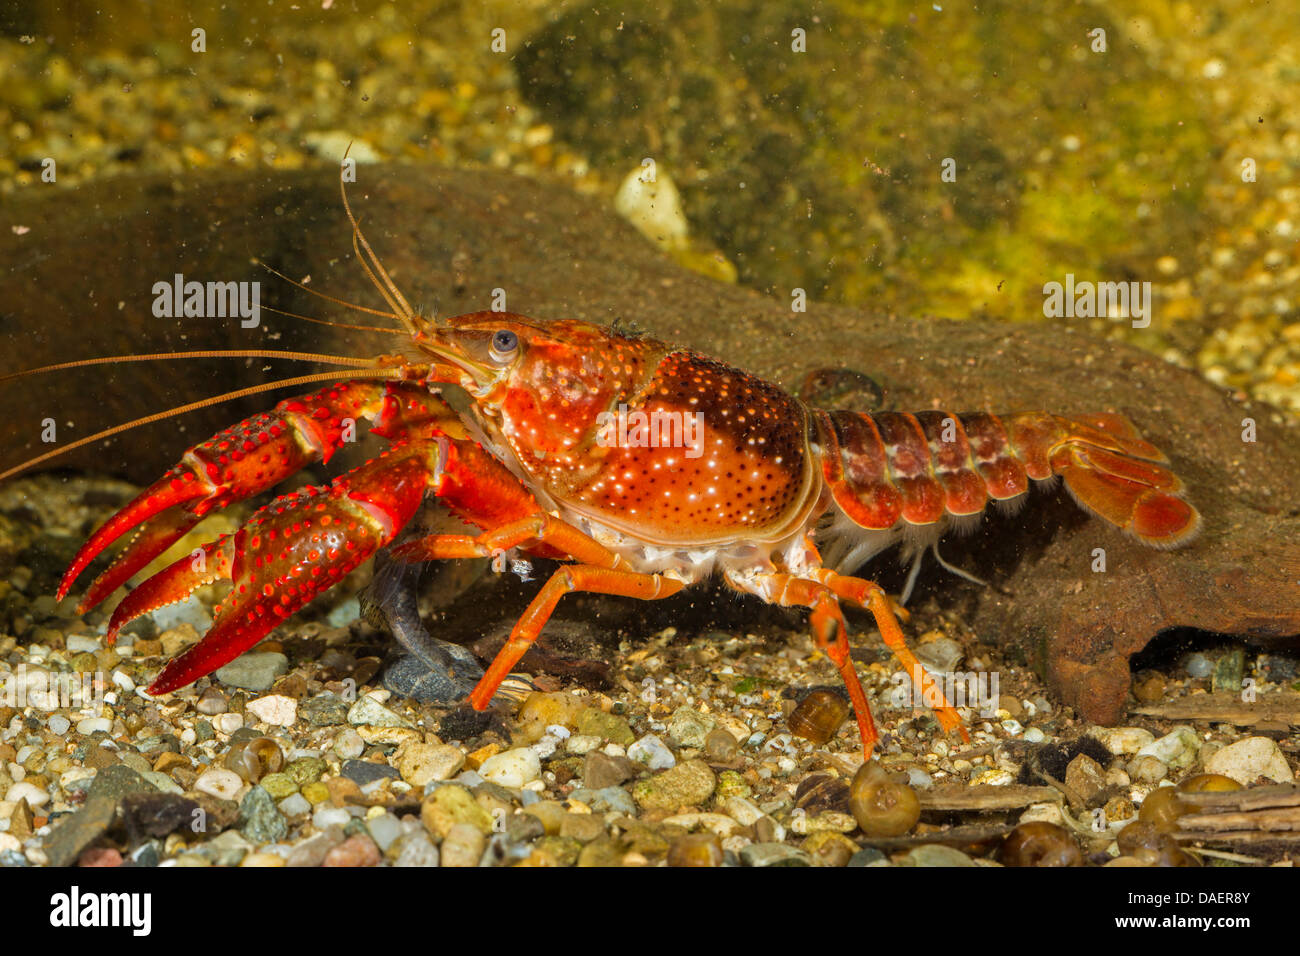 Louisiana red crayfish, red swamp crayfish, Louisiana swamp crayfish, red crayfish (Procambarus clarkii), male, Germany Stock Photo